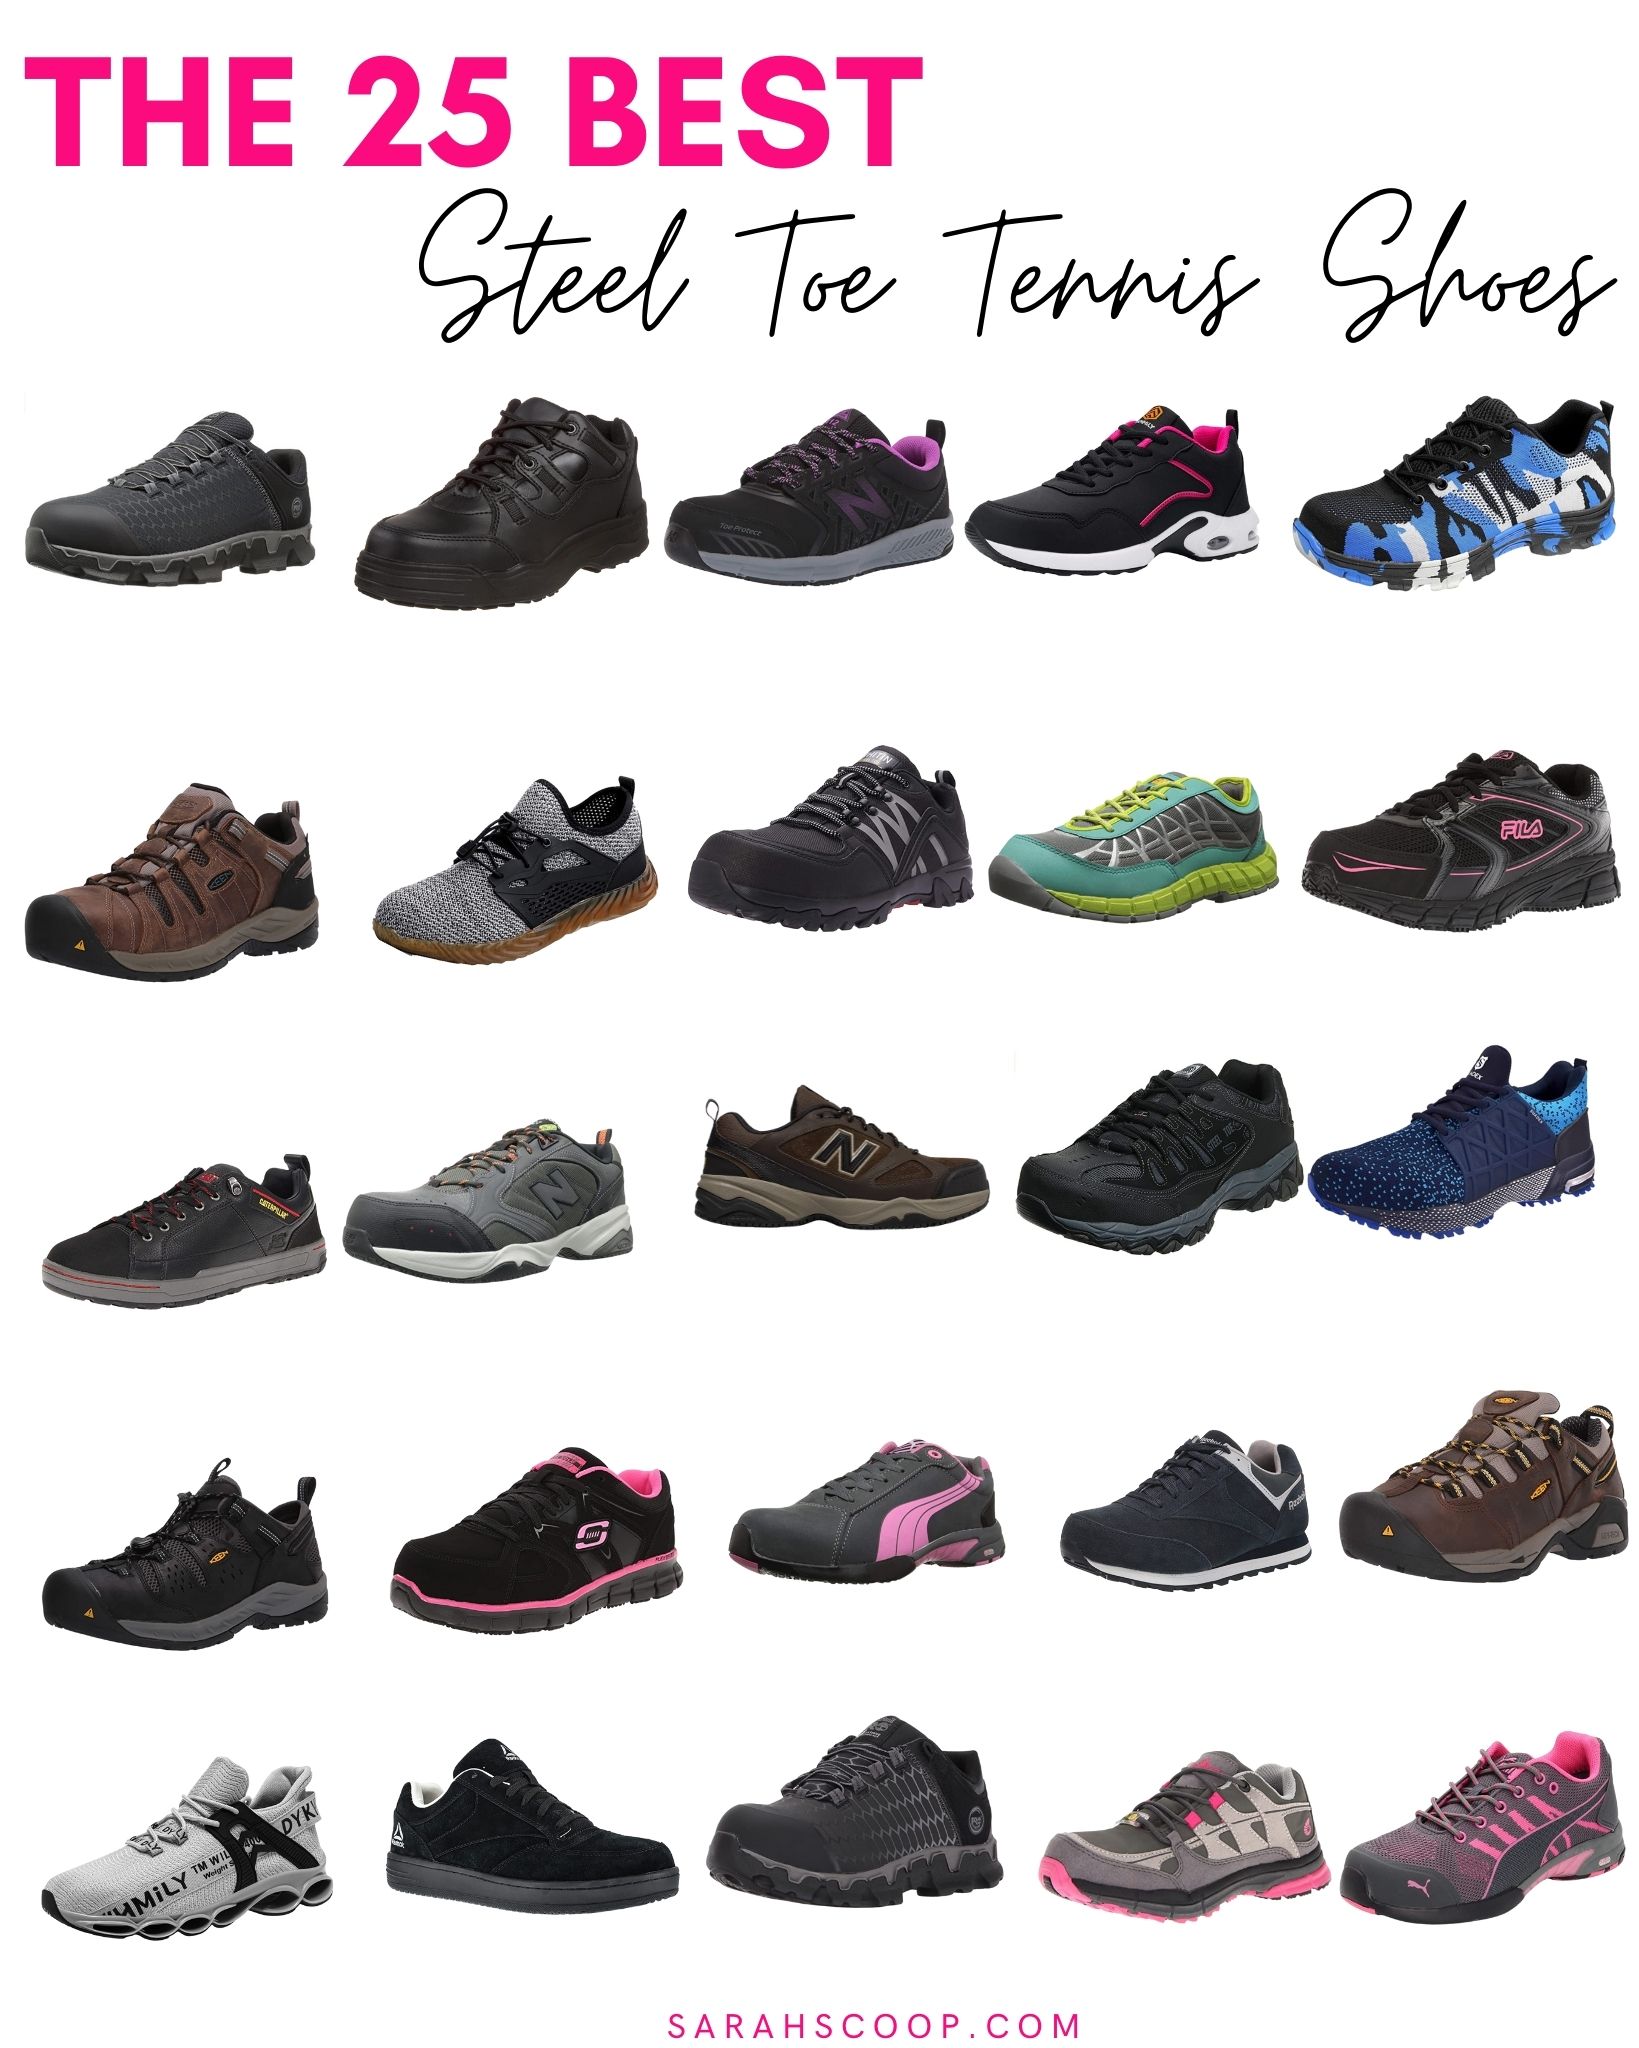 The 25 Best Steel Toe Tennis Shoes [2022] - Sarah Scoop